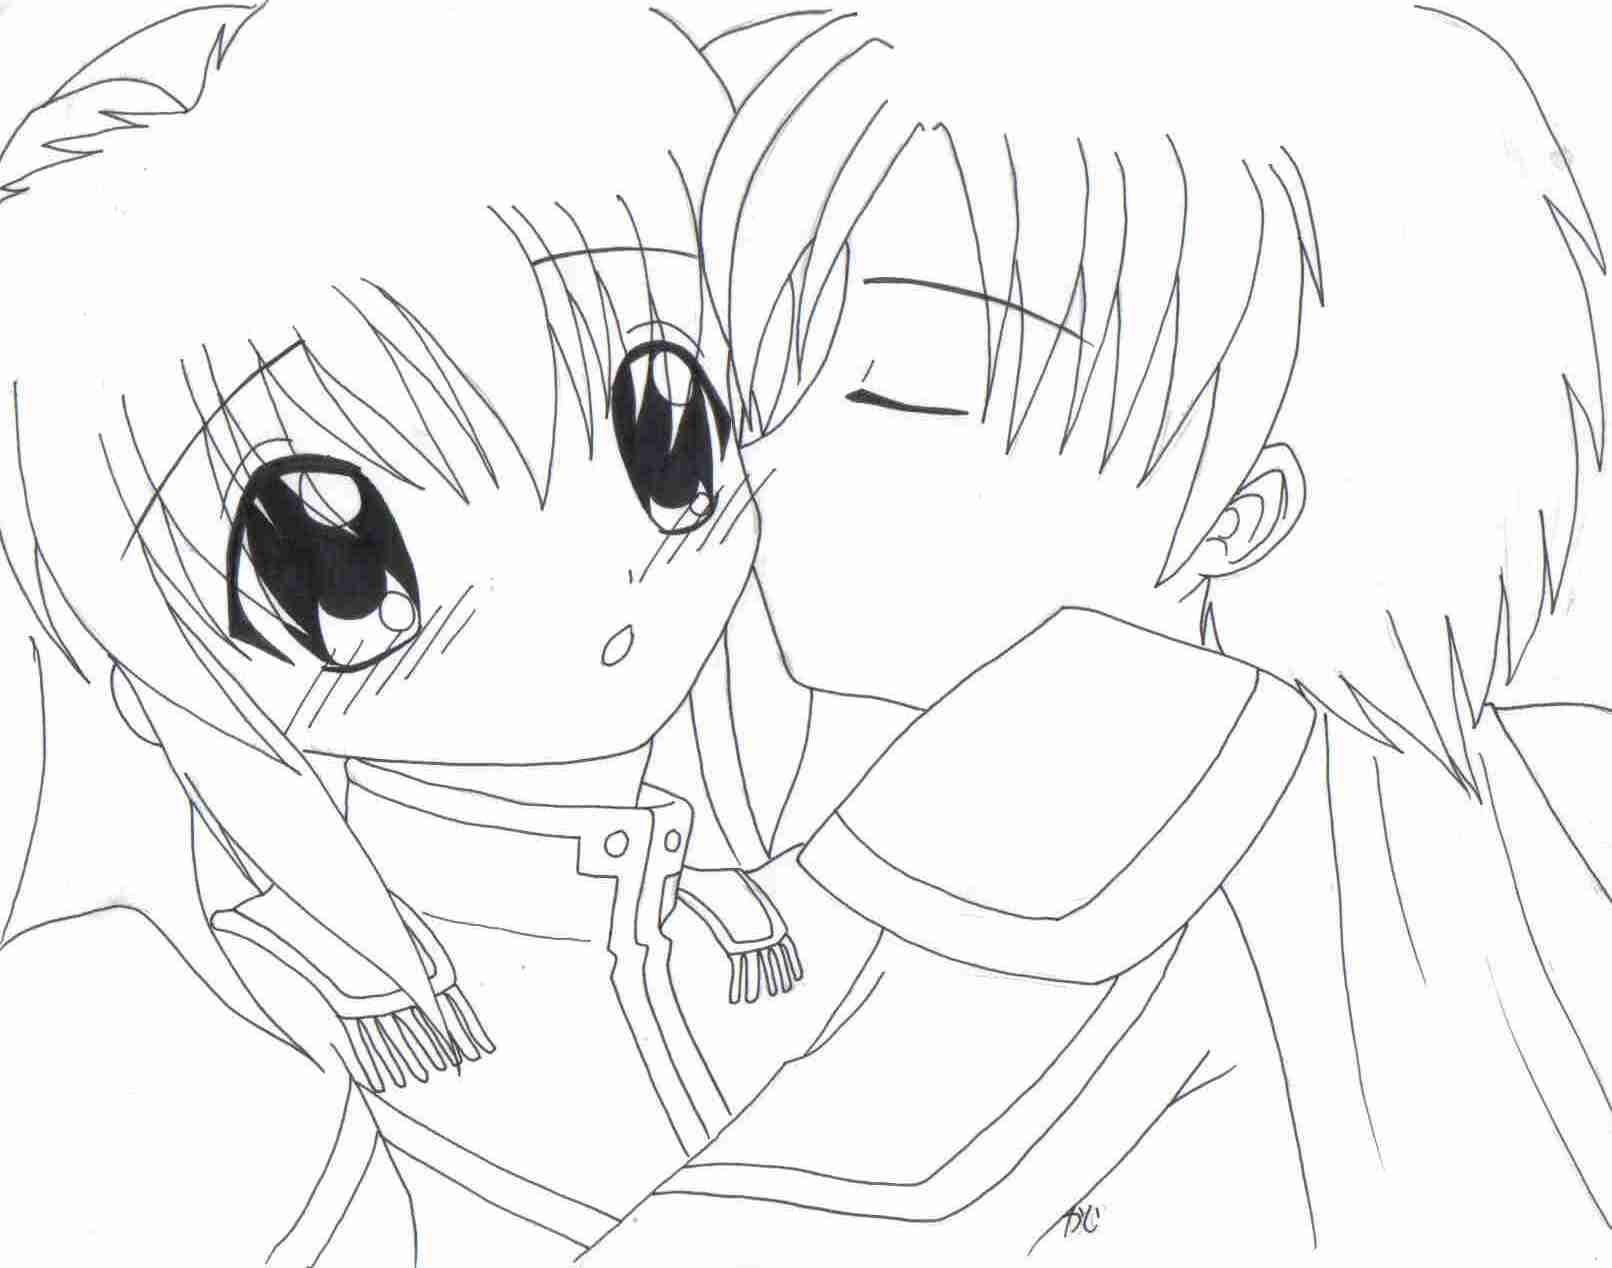 Takuto kisses Milfeulle by hisashi